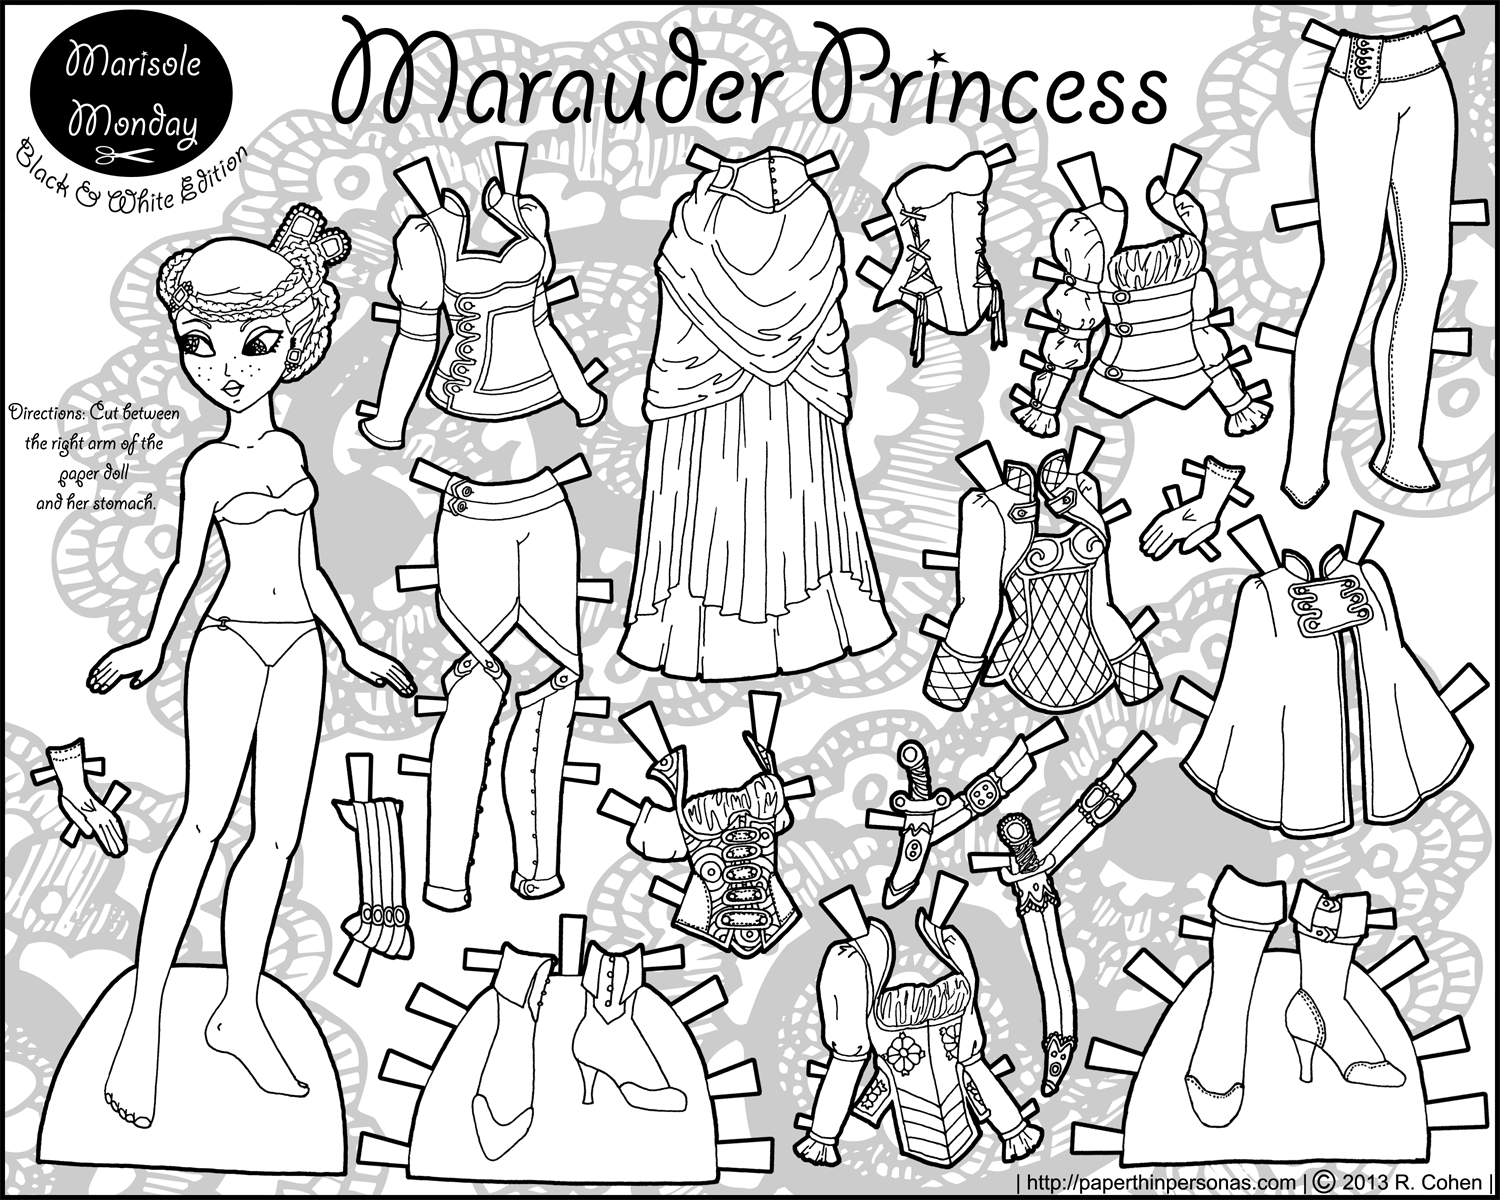 marisole marauder princess